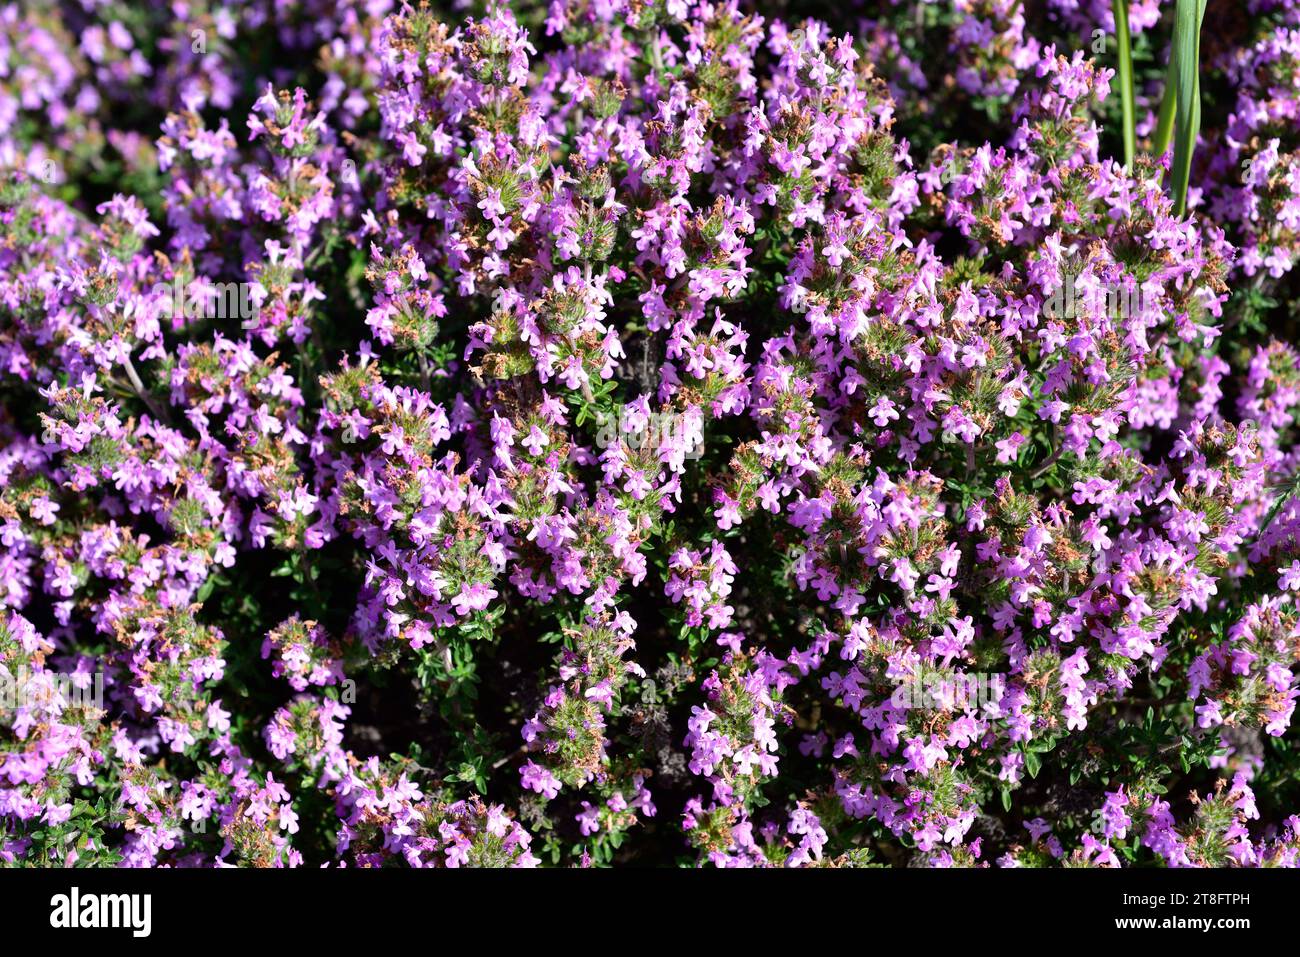 Pink savory (Satureja thymbra) is an evergreen aromatic shrub native to eastern Mediterranean basin. Flowering plant. Stock Photo